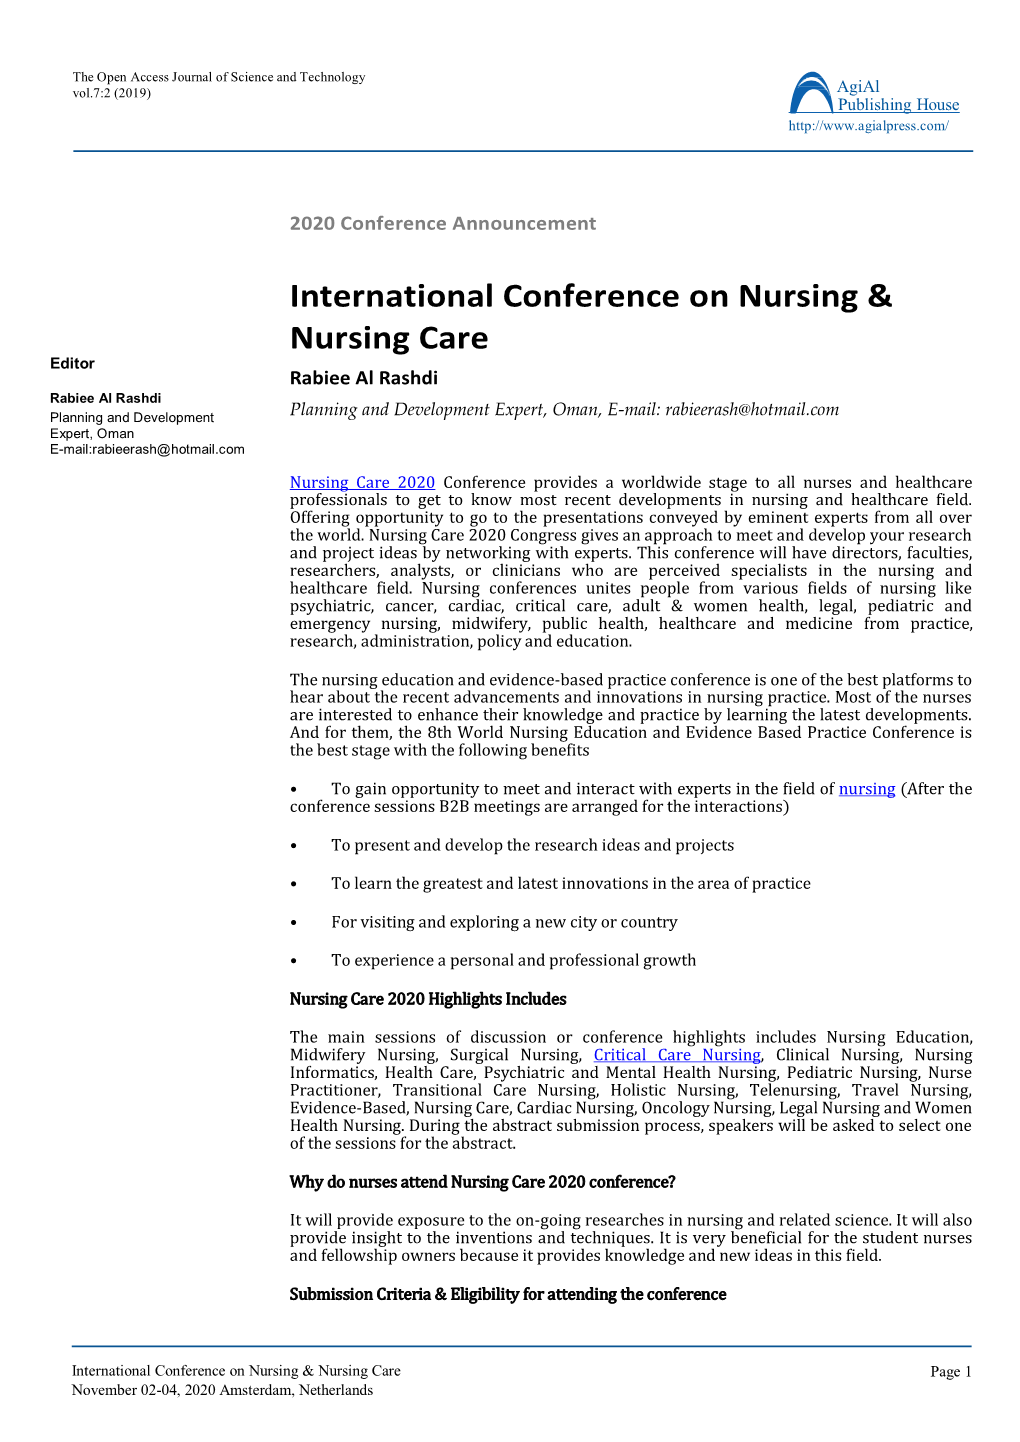 International Conference on Nursing & Nursing Care